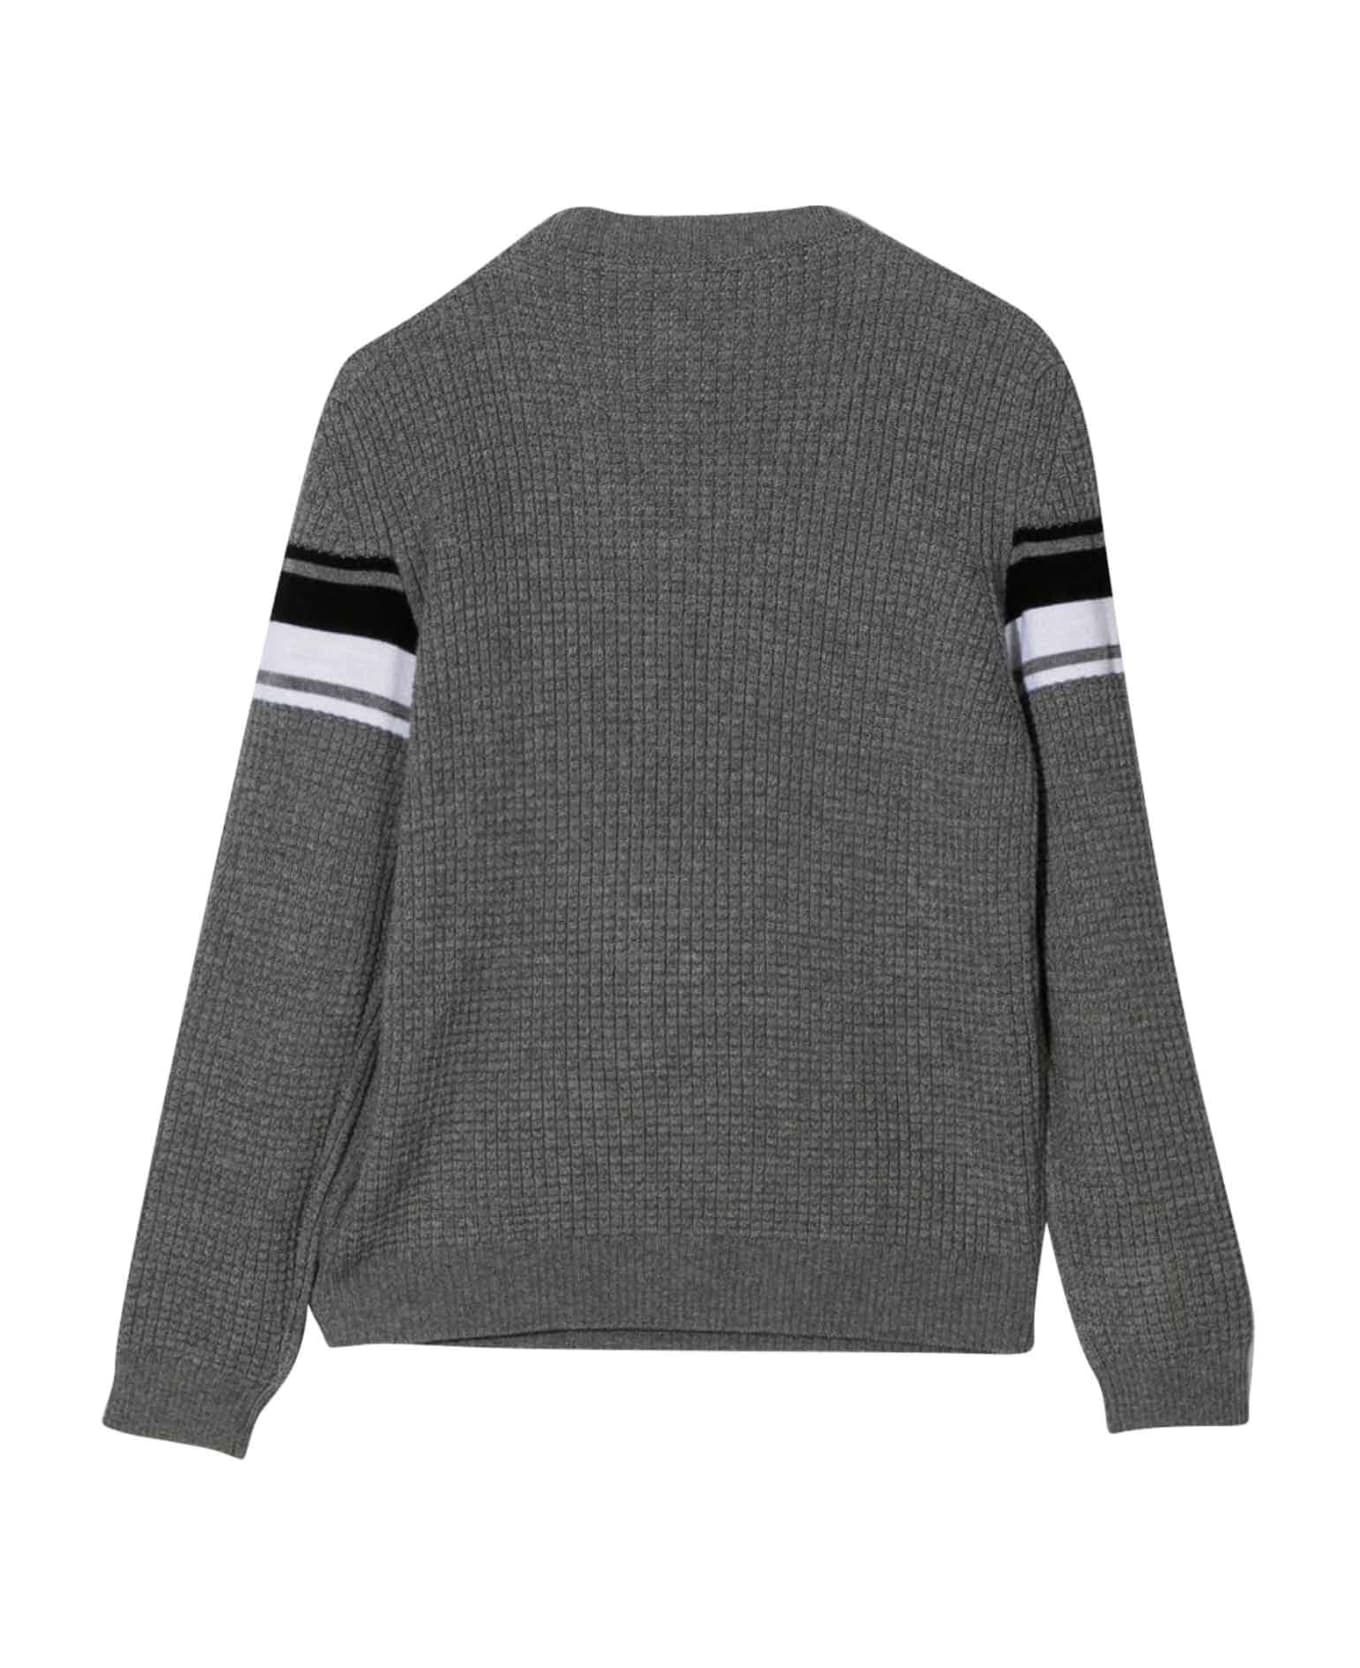 Moncler Gray Sweater Unisex - GREY